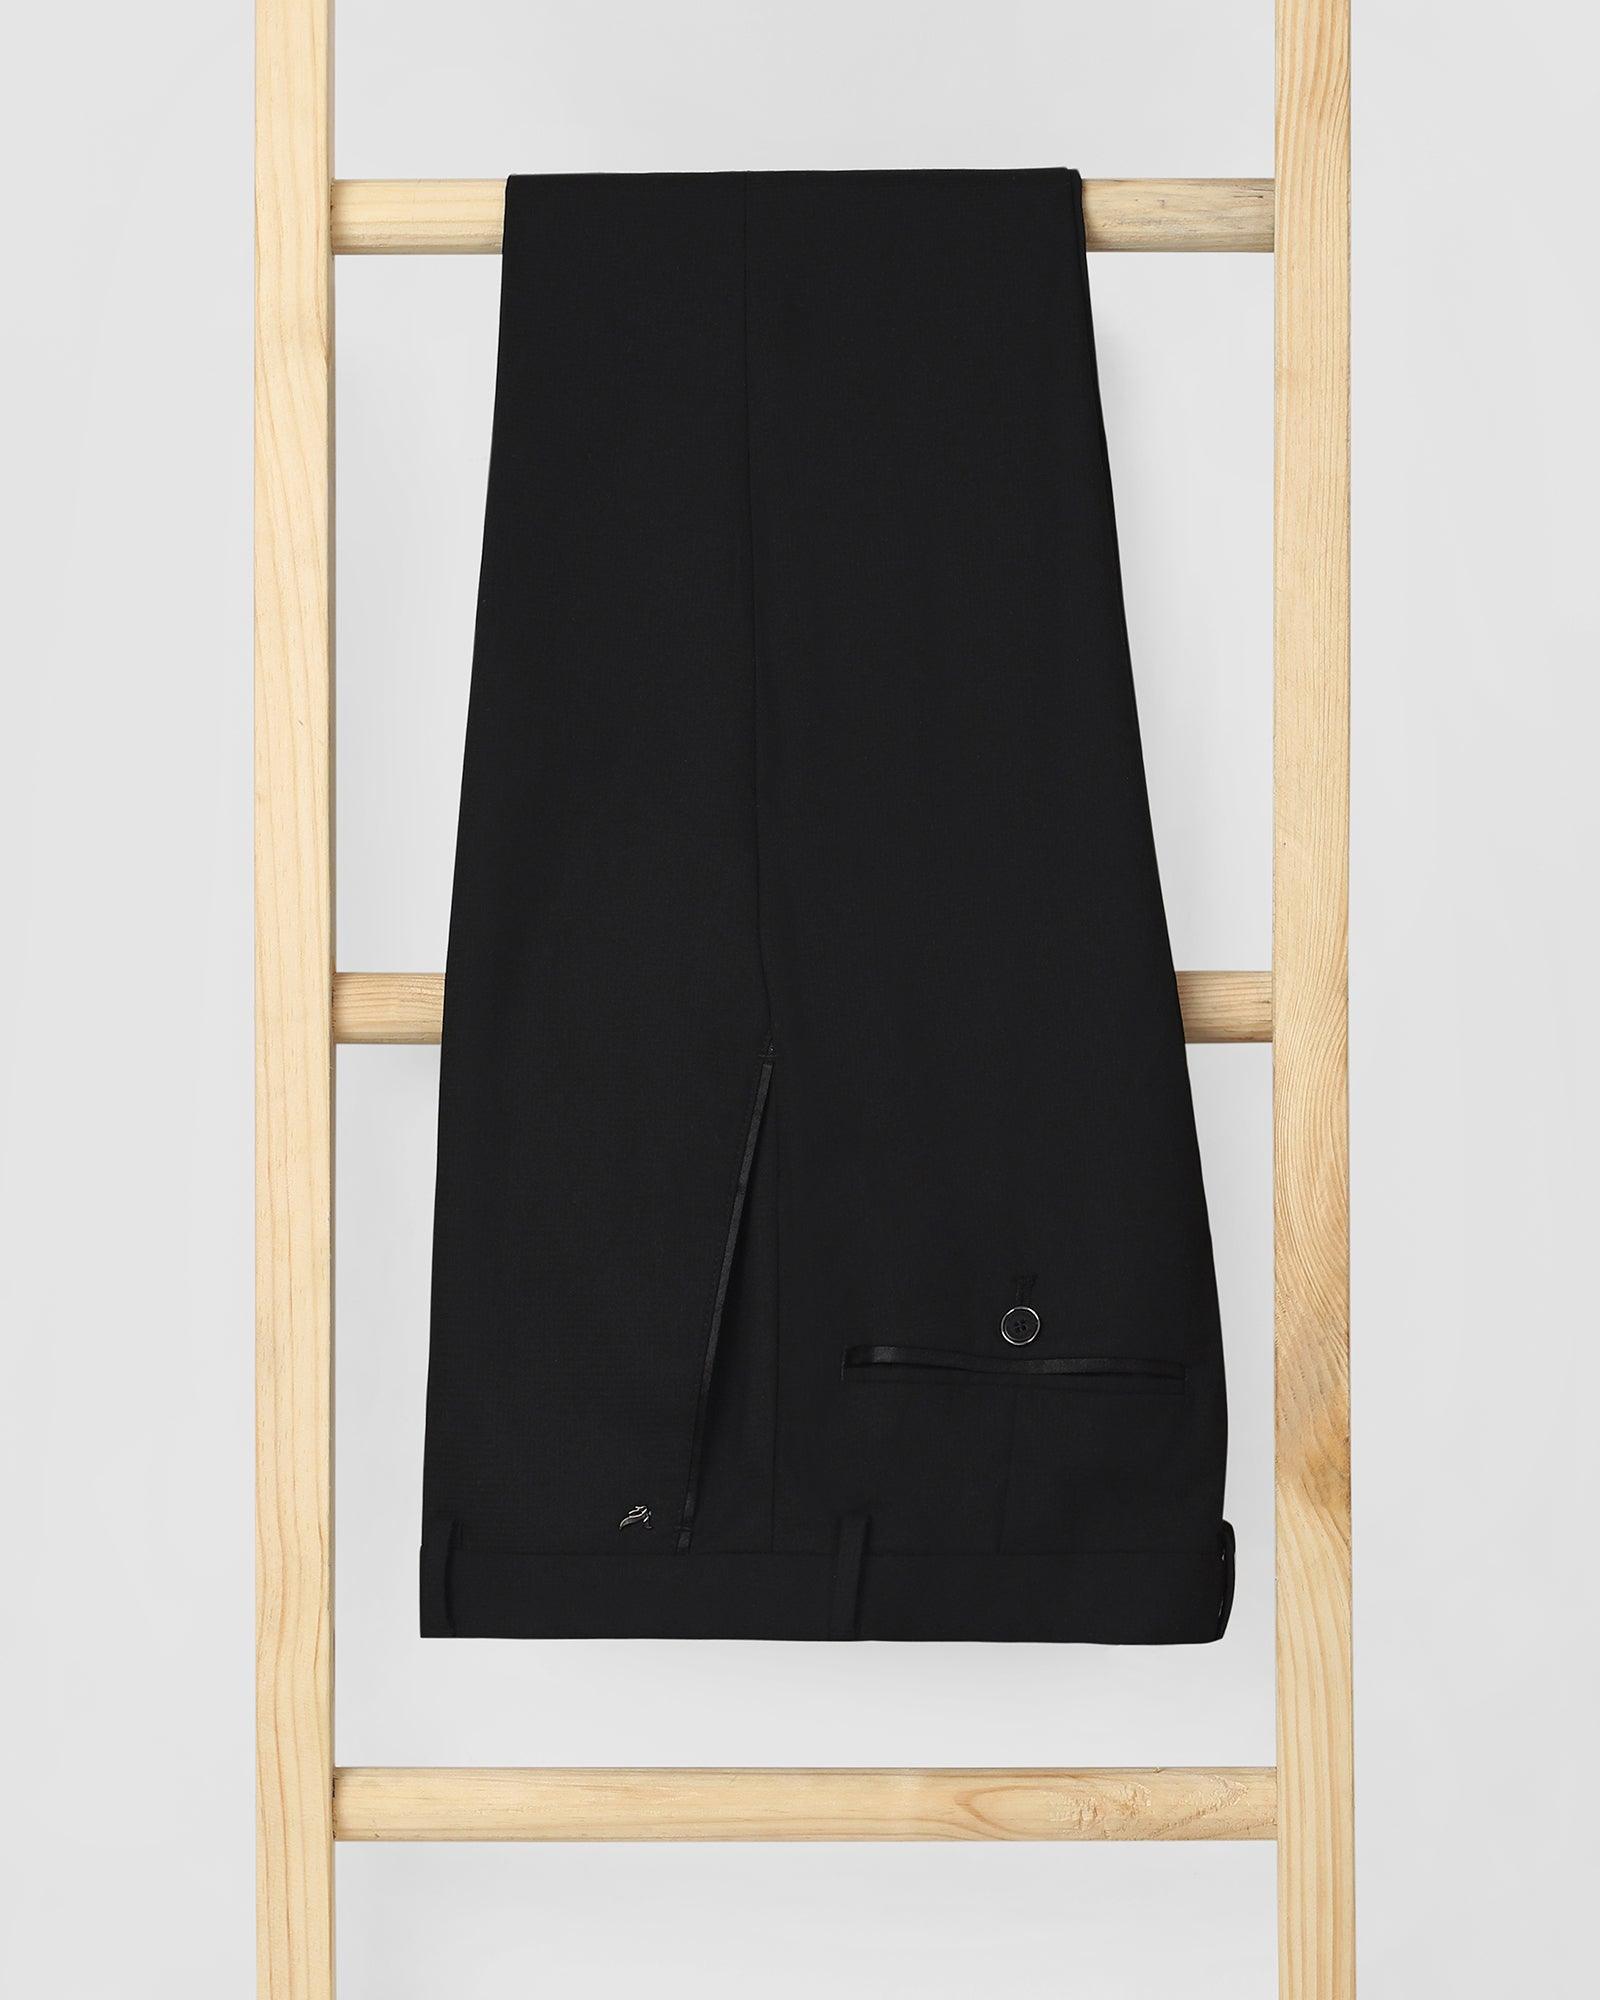 Slim Fit B-91 Formal Black Textured Trouser - Blacoon